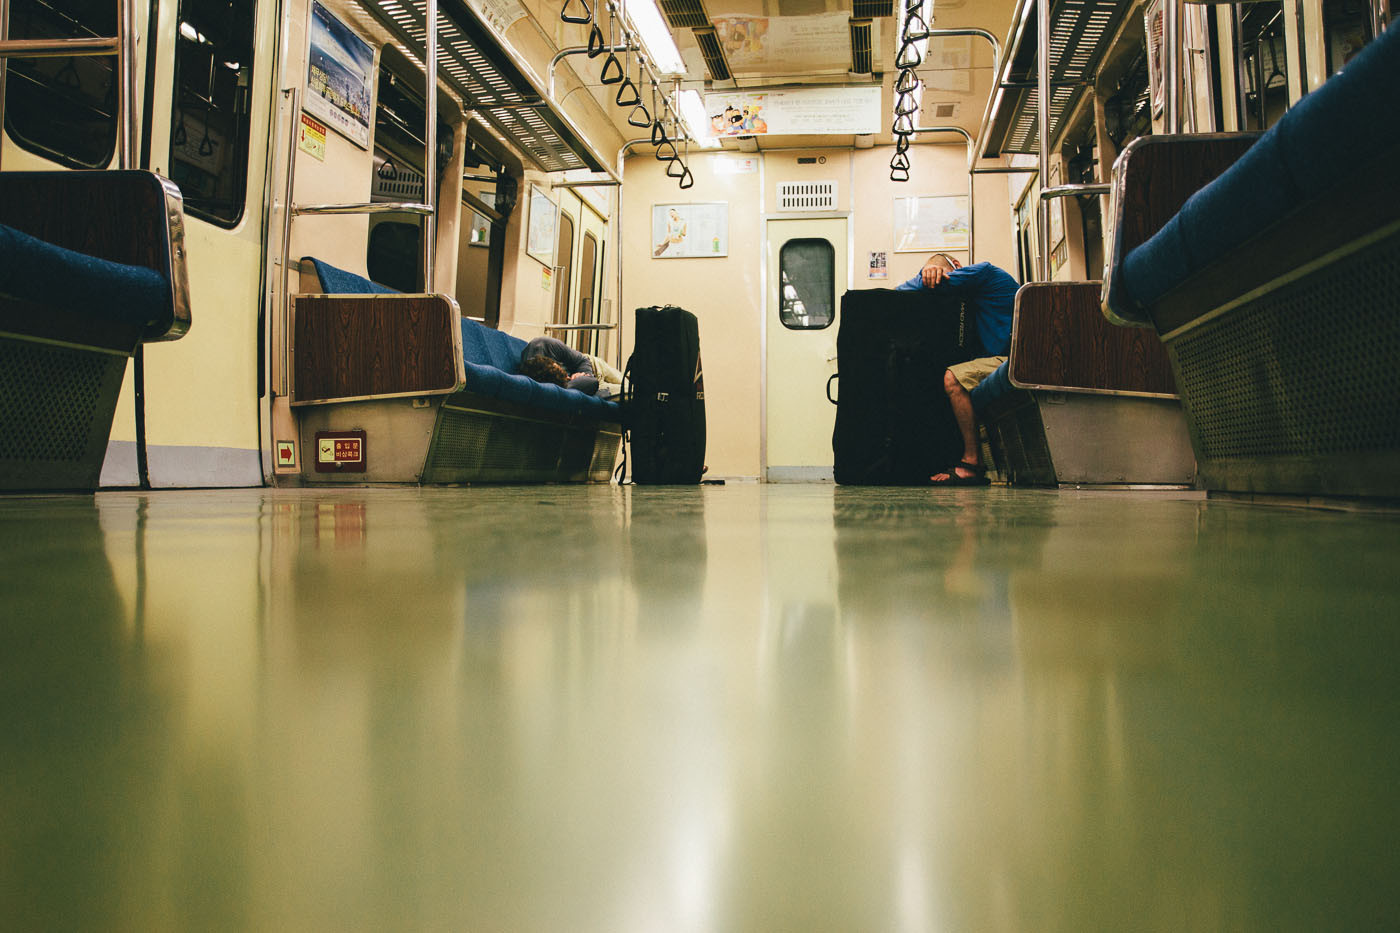 Dave McAllister and Paul Lammens sleep aboard a subway train in Seoul, South Korea